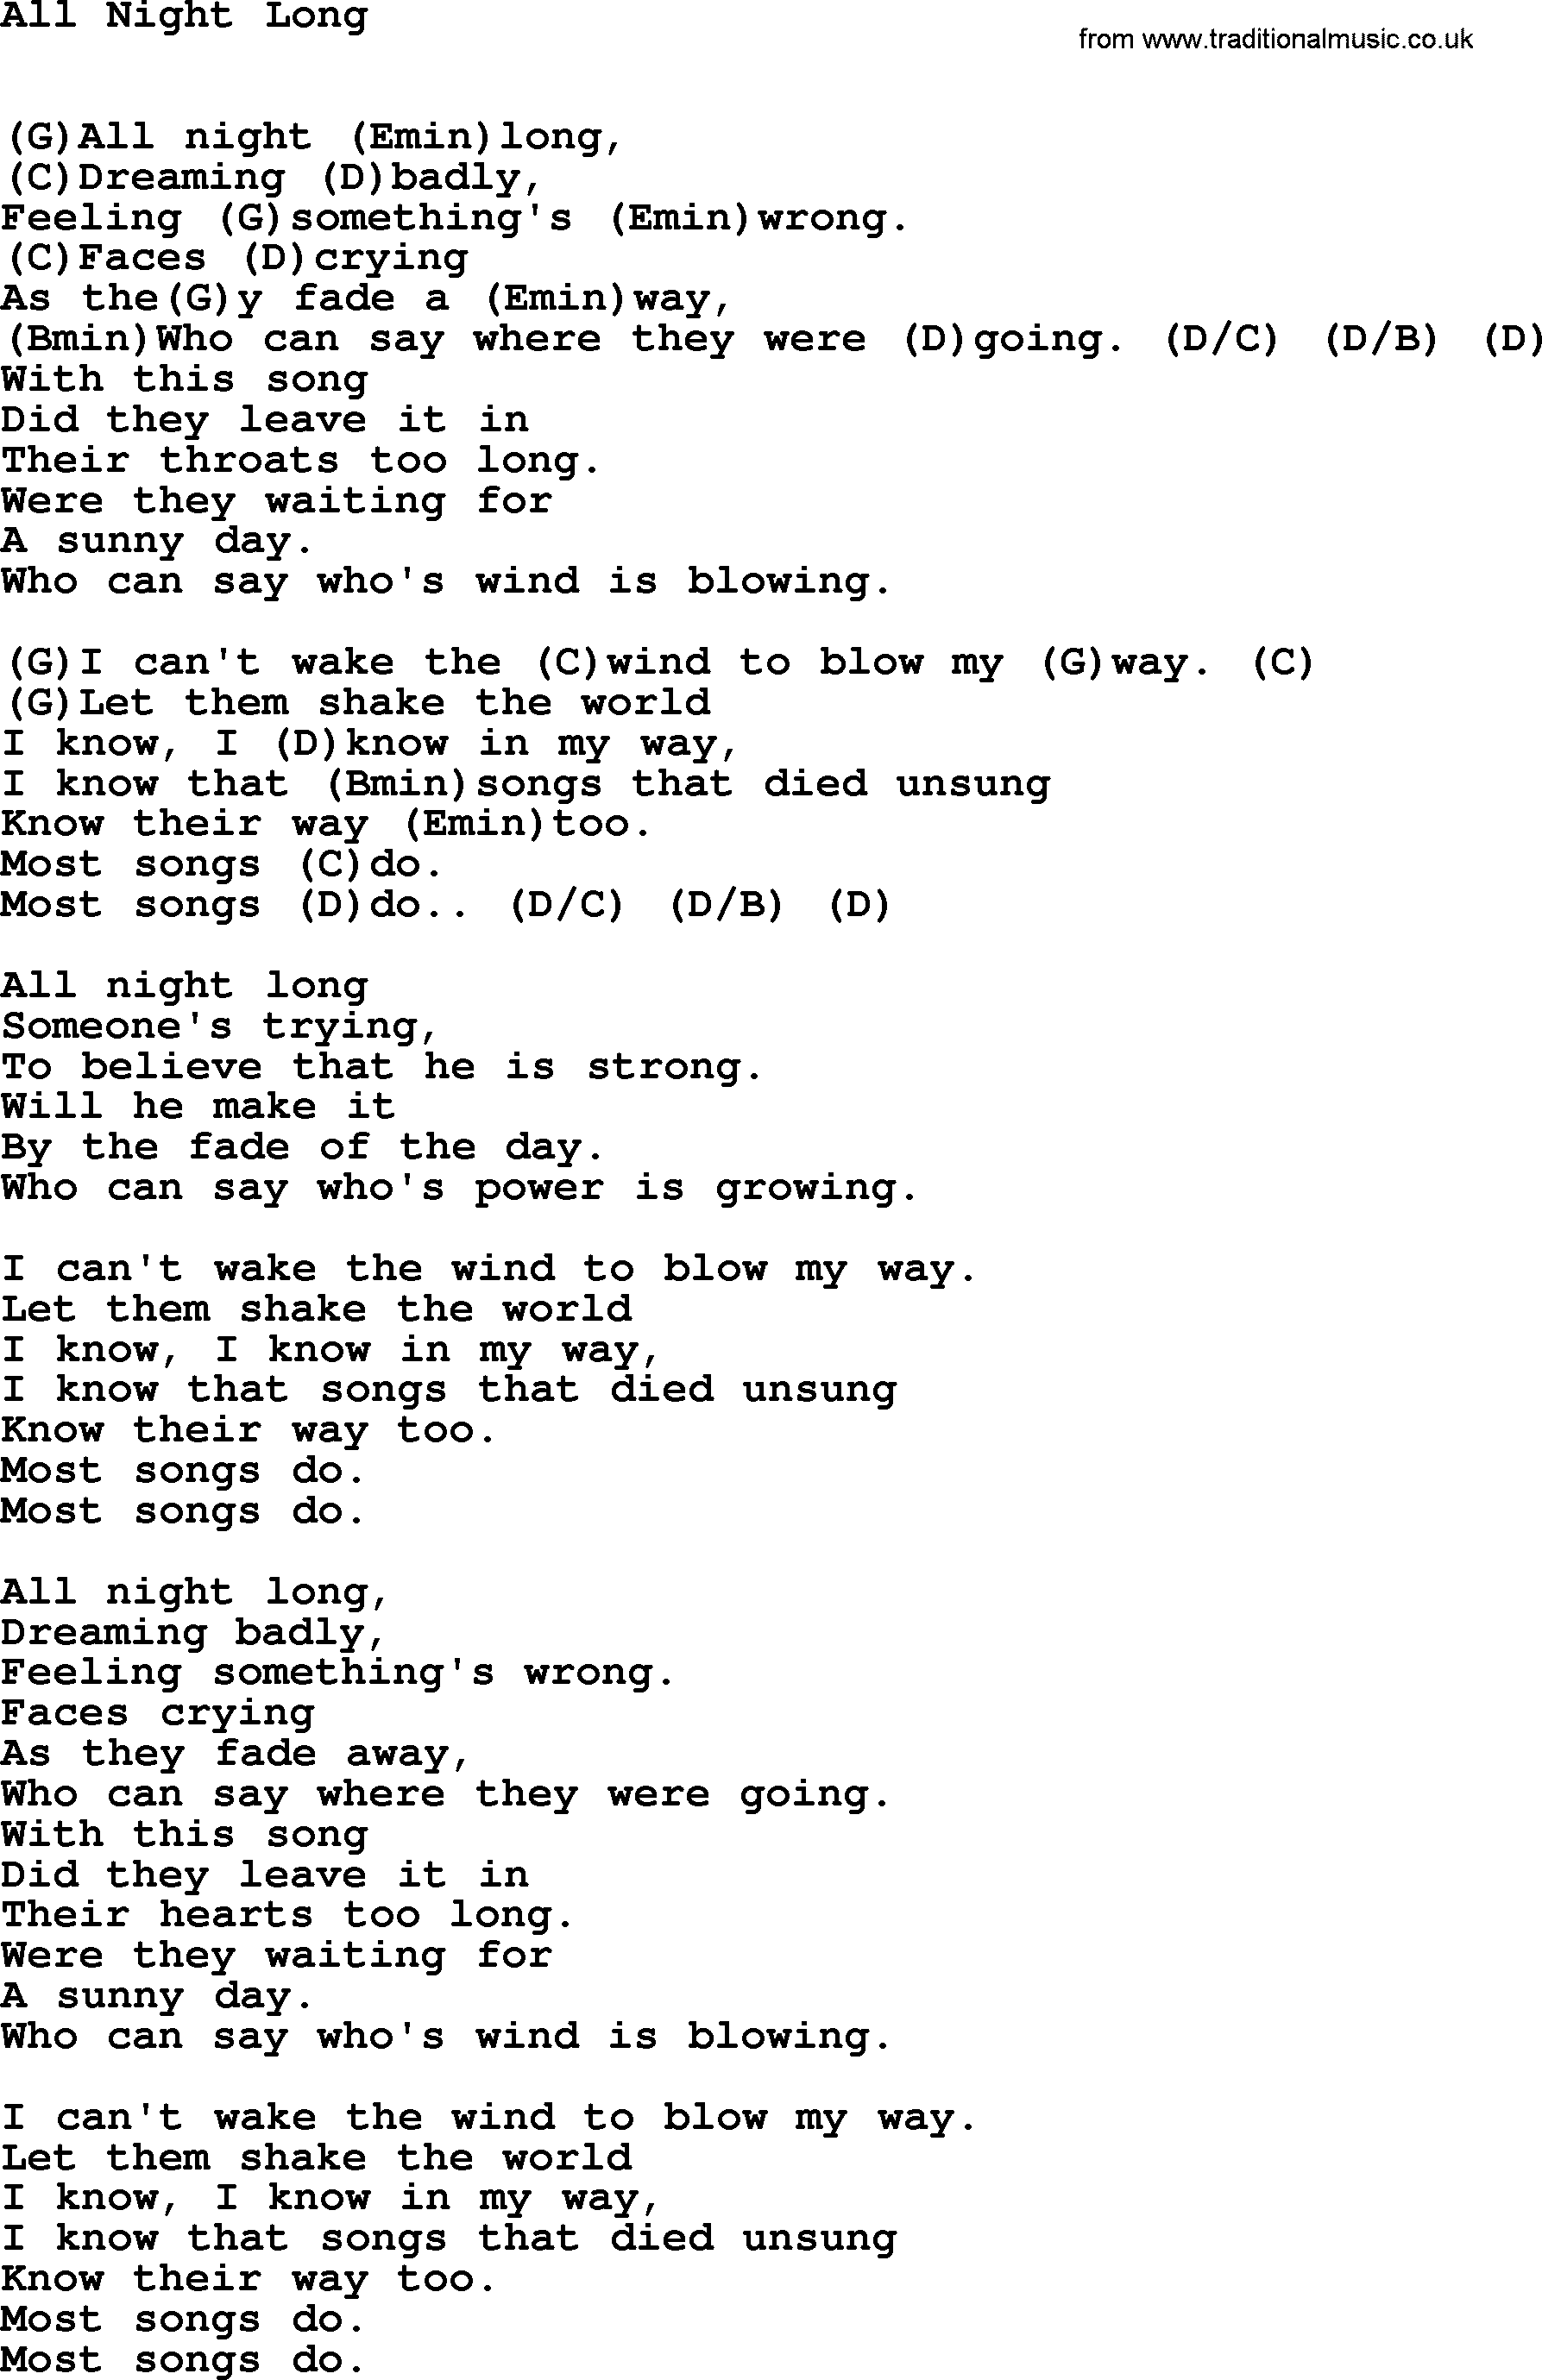 Tom Paxton song: All Night Long, lyrics and chords